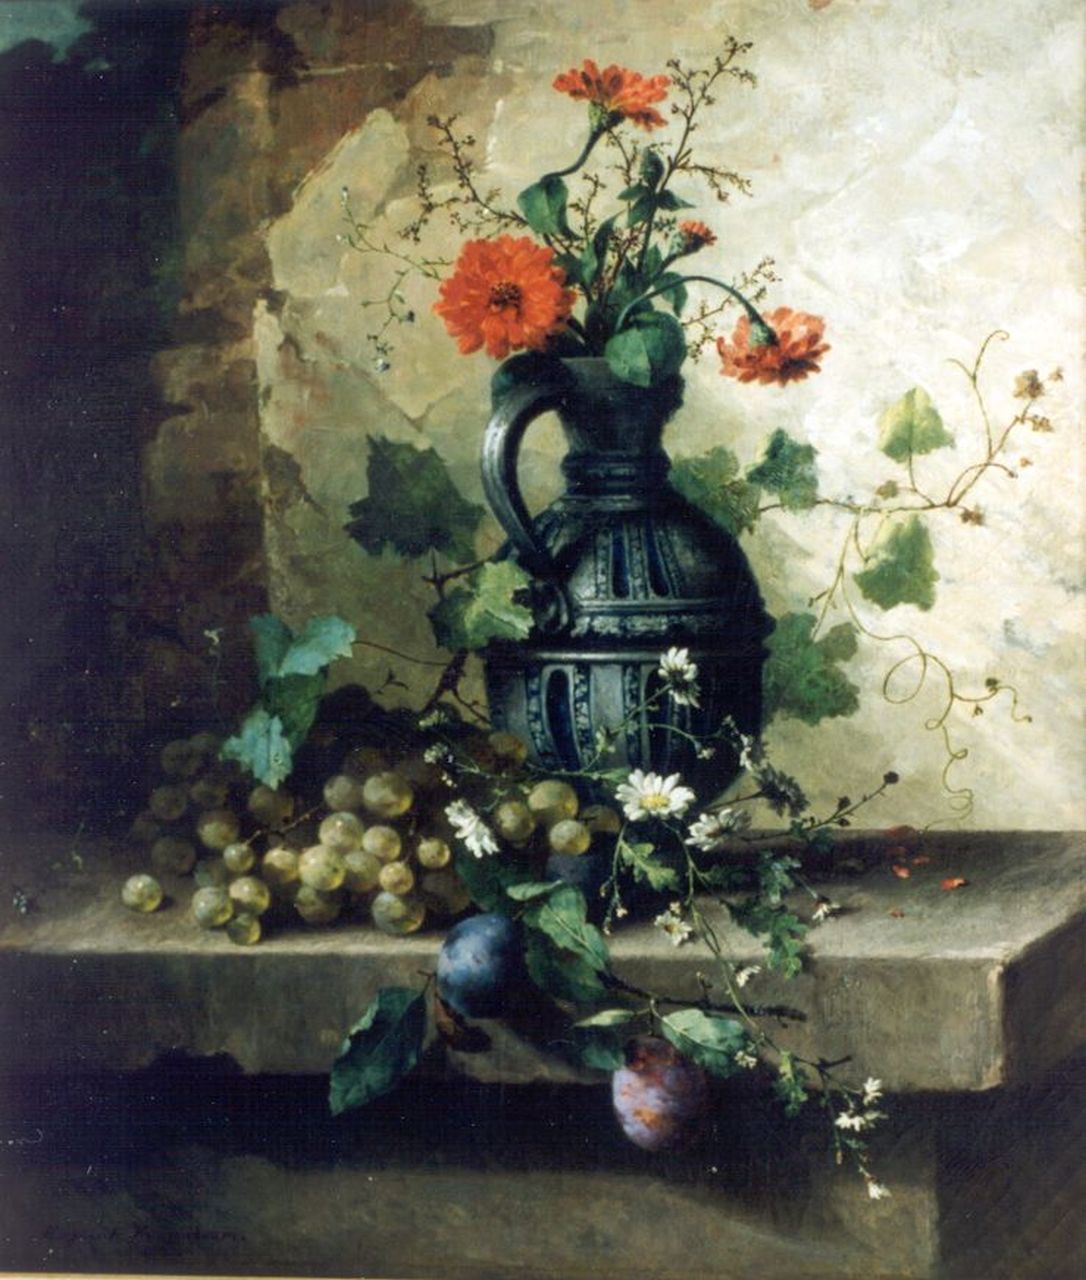 Roosenboom M.C.J.W.H.  | 'Margaretha' Cornelia Johanna Wilhelmina Henriëtta Roosenboom, A still life with flowers, Öl auf Leinwand 64,5 x 55,5 cm, signed l.l.